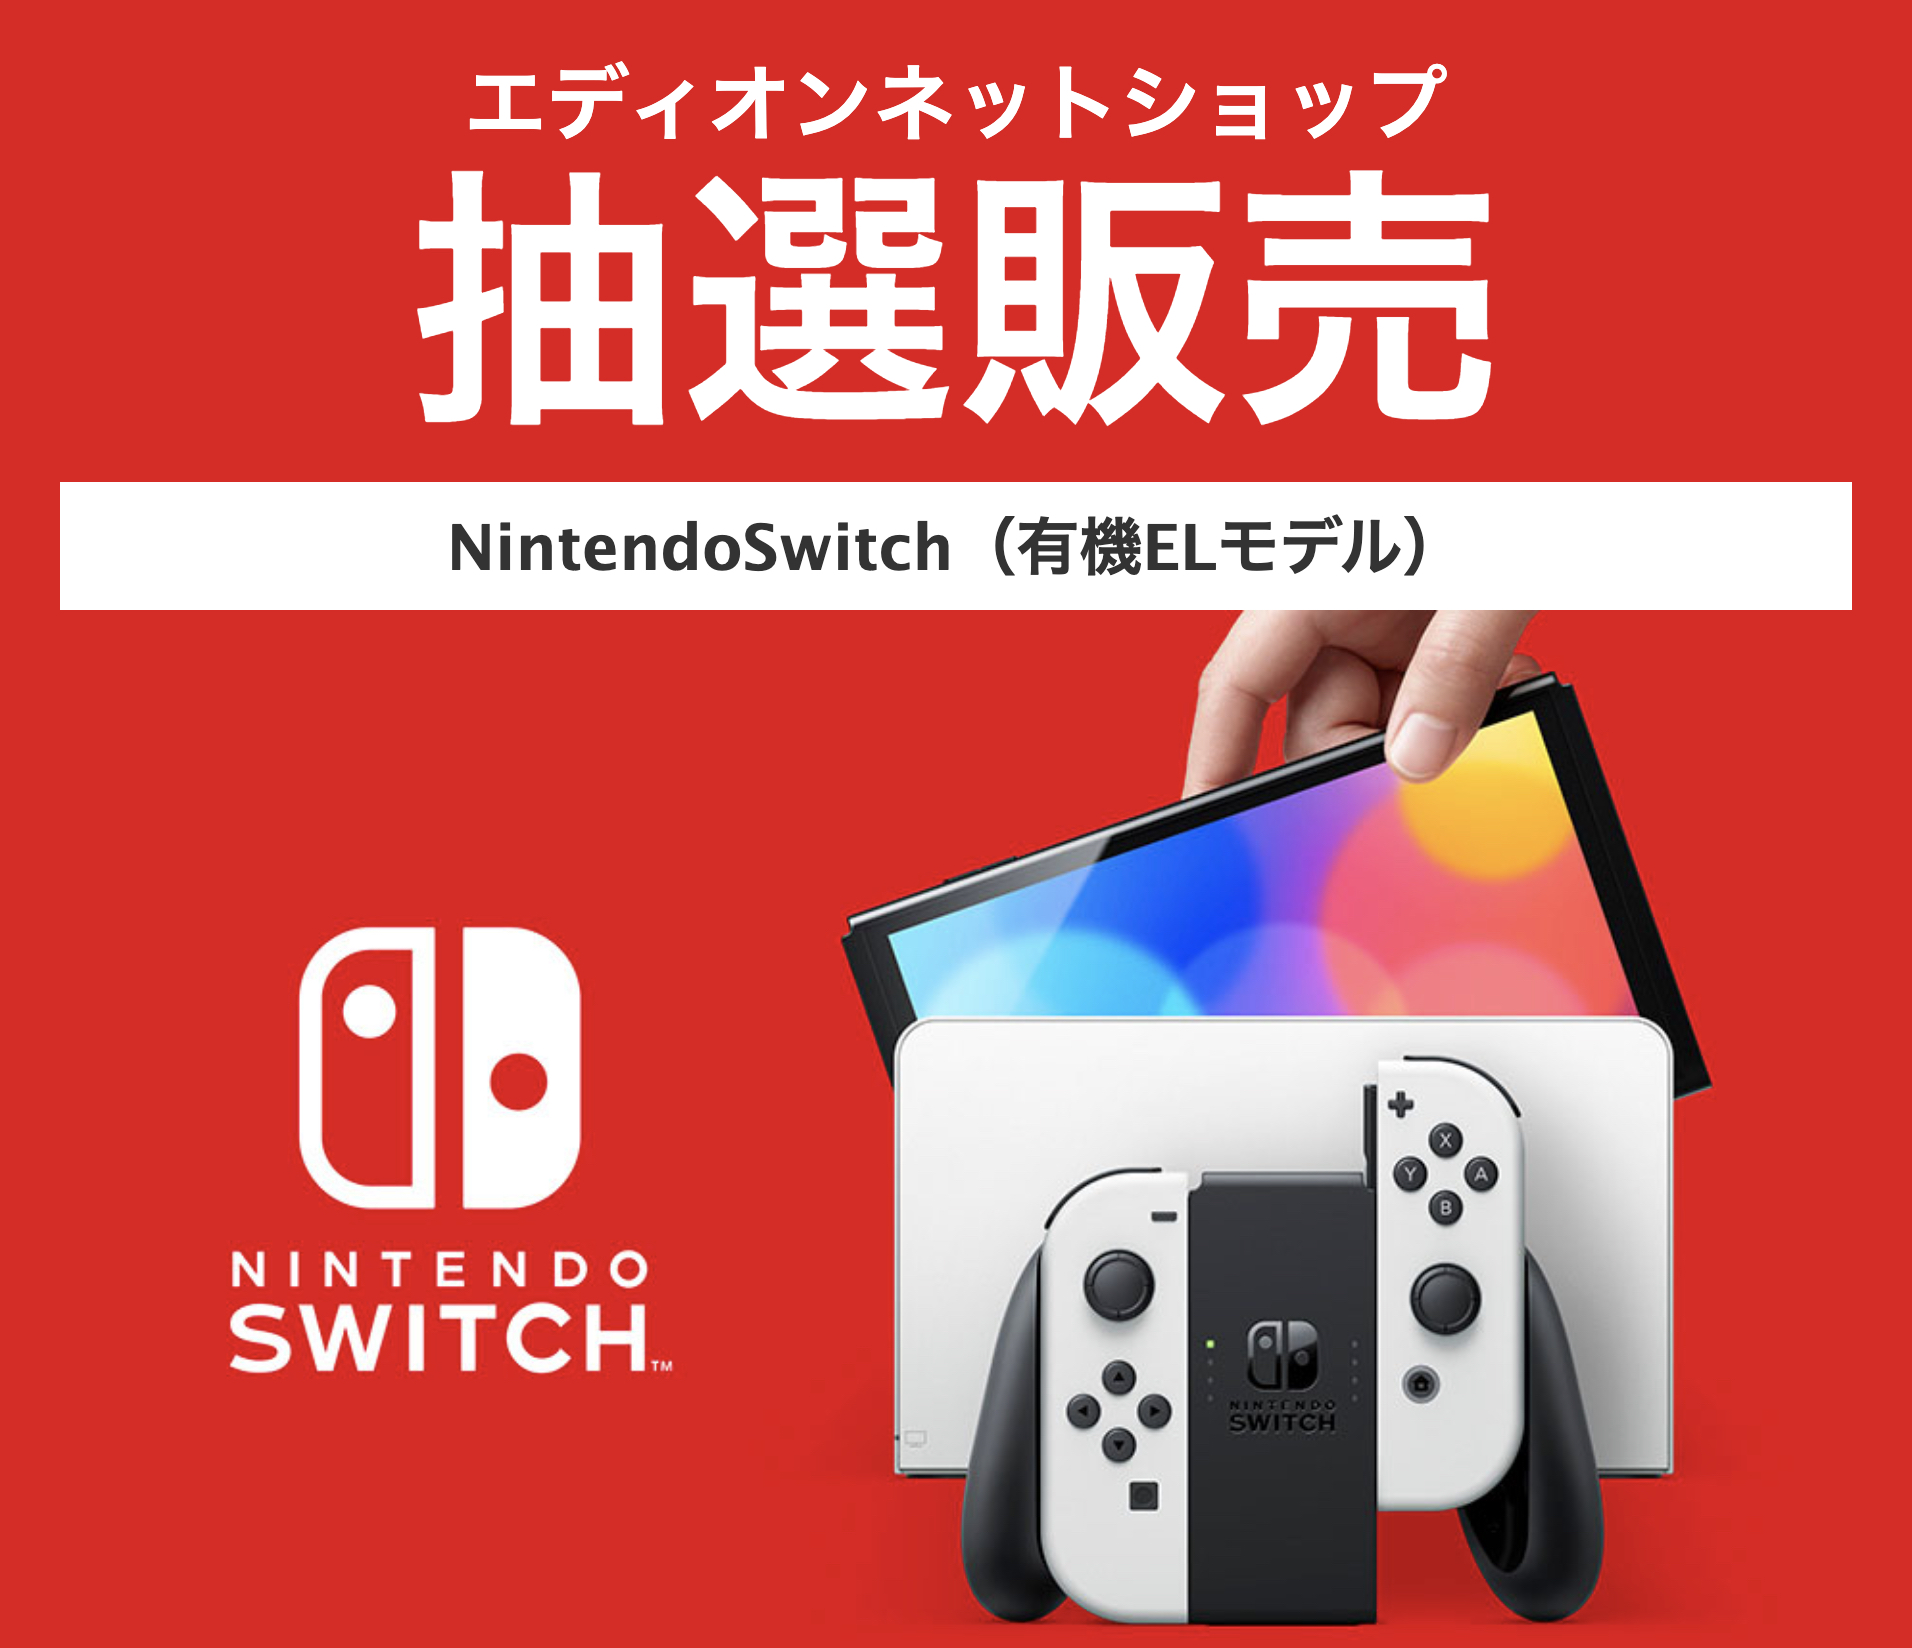 Switch 有機elモデル エディオンネットショップにて抽選販売を11月14日まで実施 Game Watch